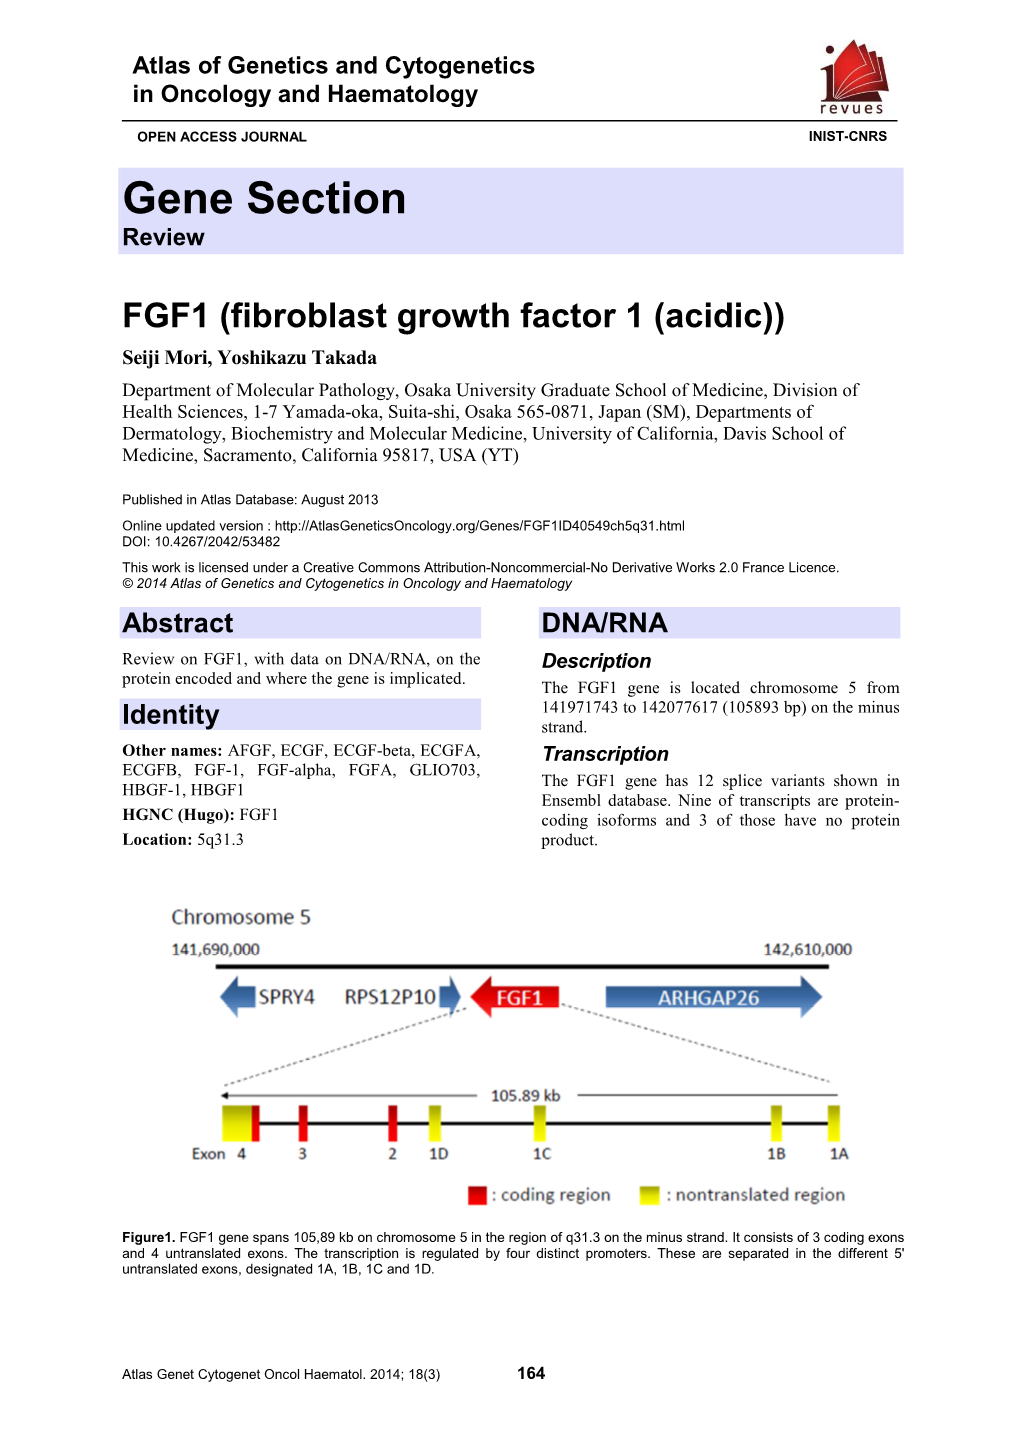 FGF1 (Fibroblast Growth Factor 1 (Acidic))